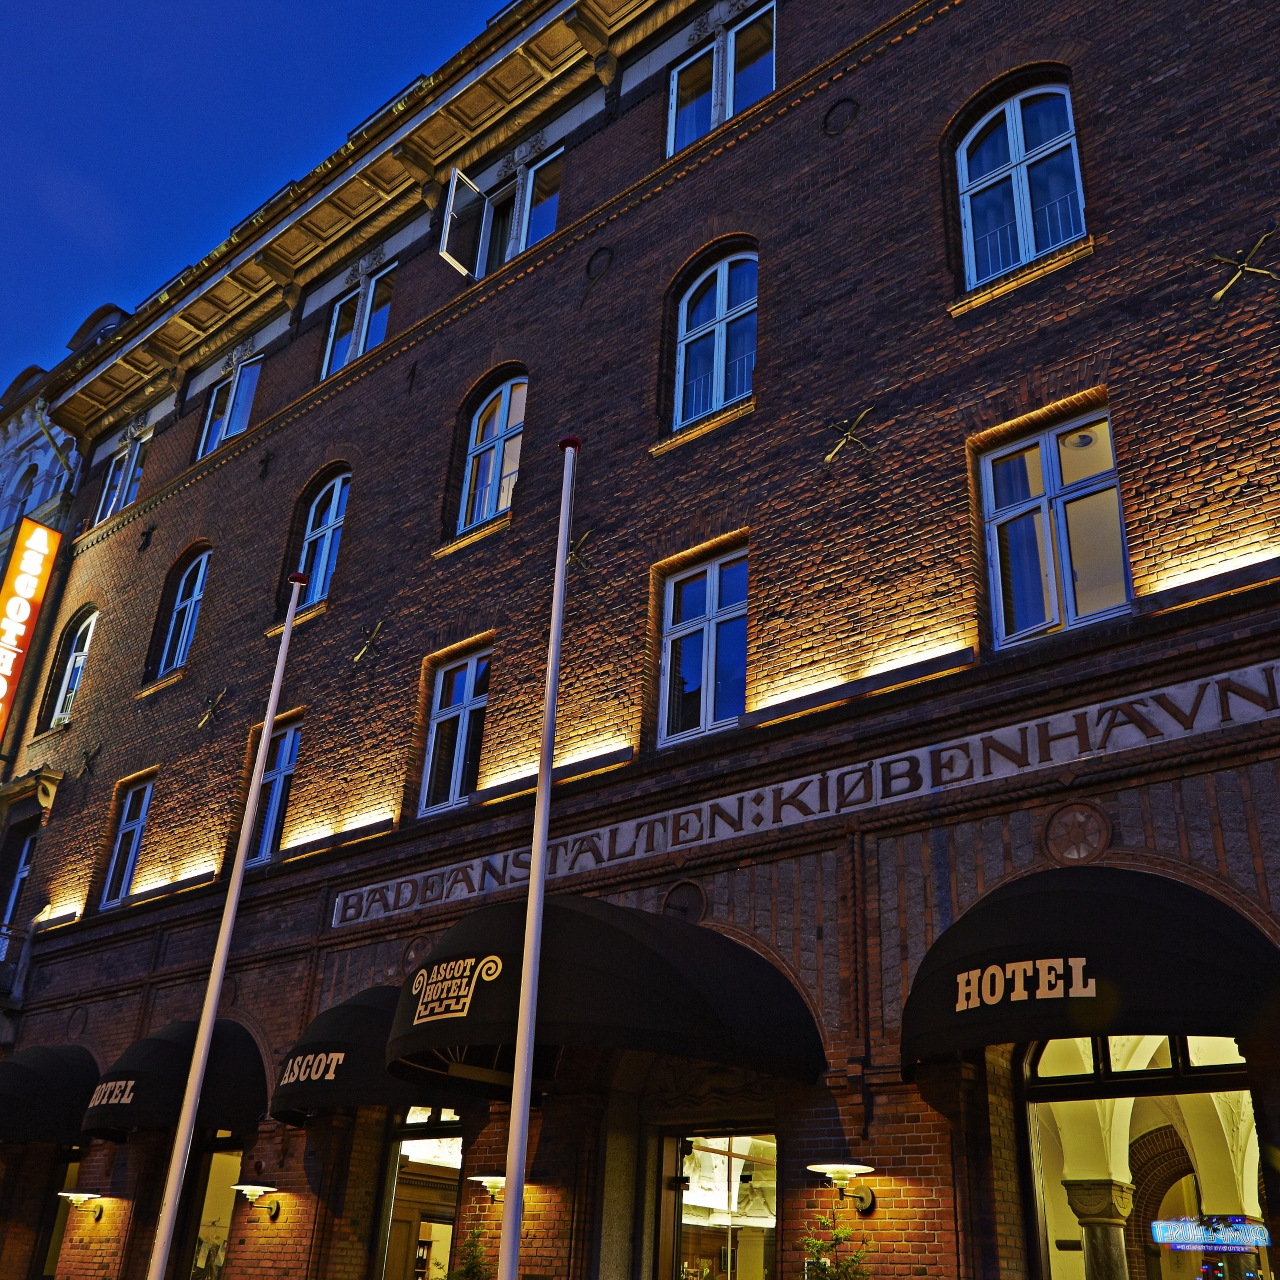 Ascot Hotel - 4 HRS star hotel in Copenhagen (Capital Region of Denmark)